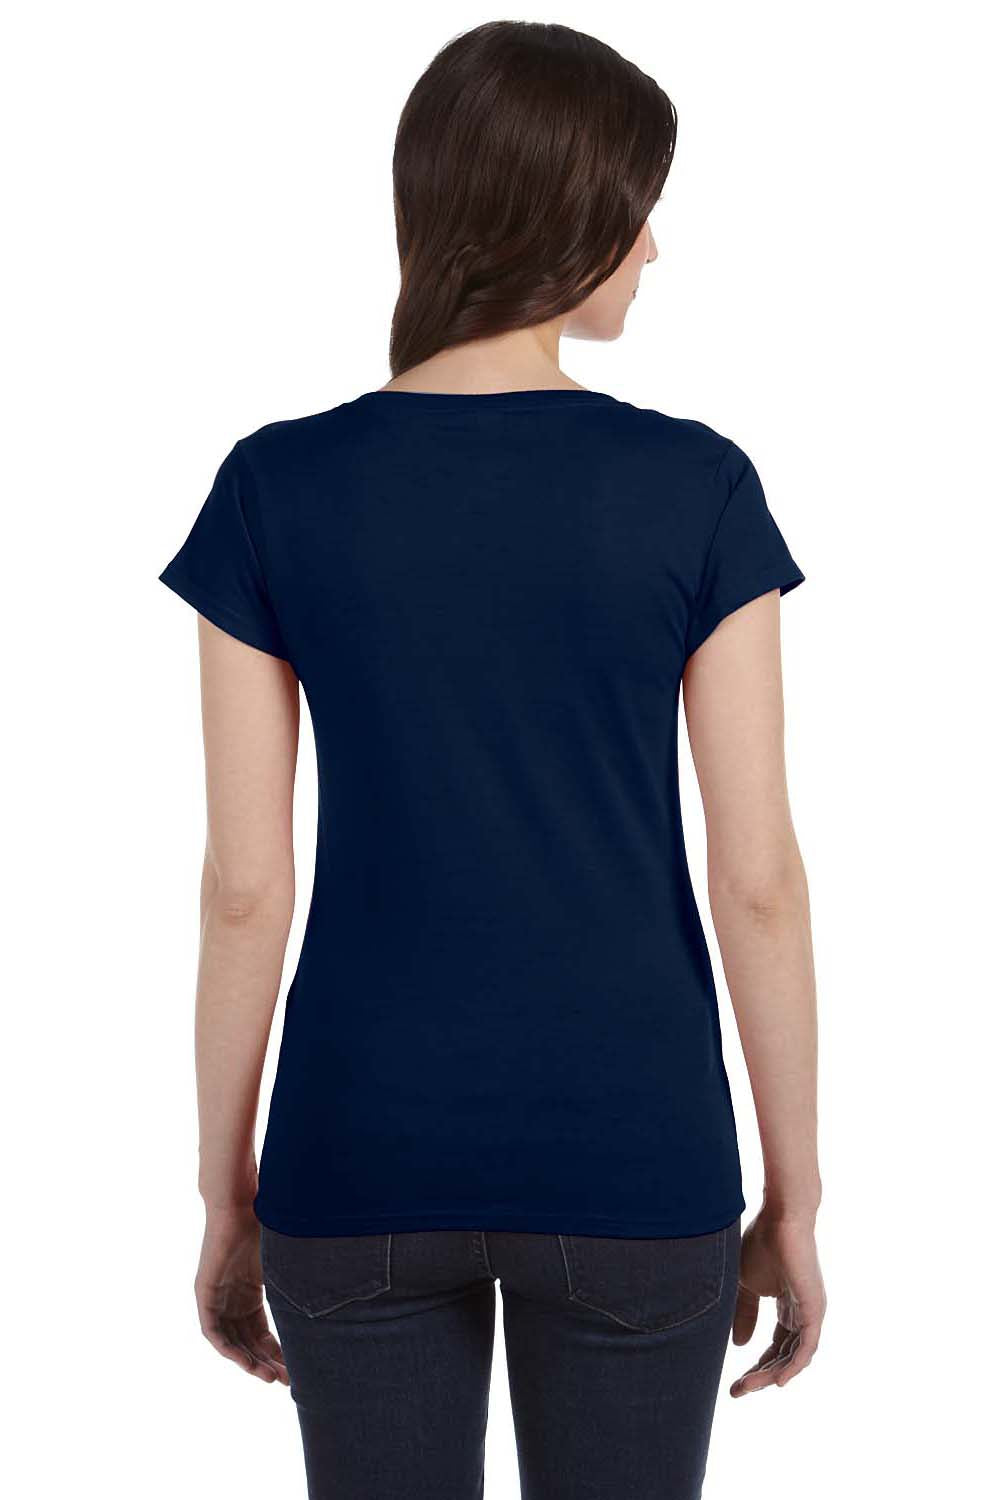 Gildan G64VL Womens Softstyle Short Sleeve V-Neck T-Shirt Navy Blue Back